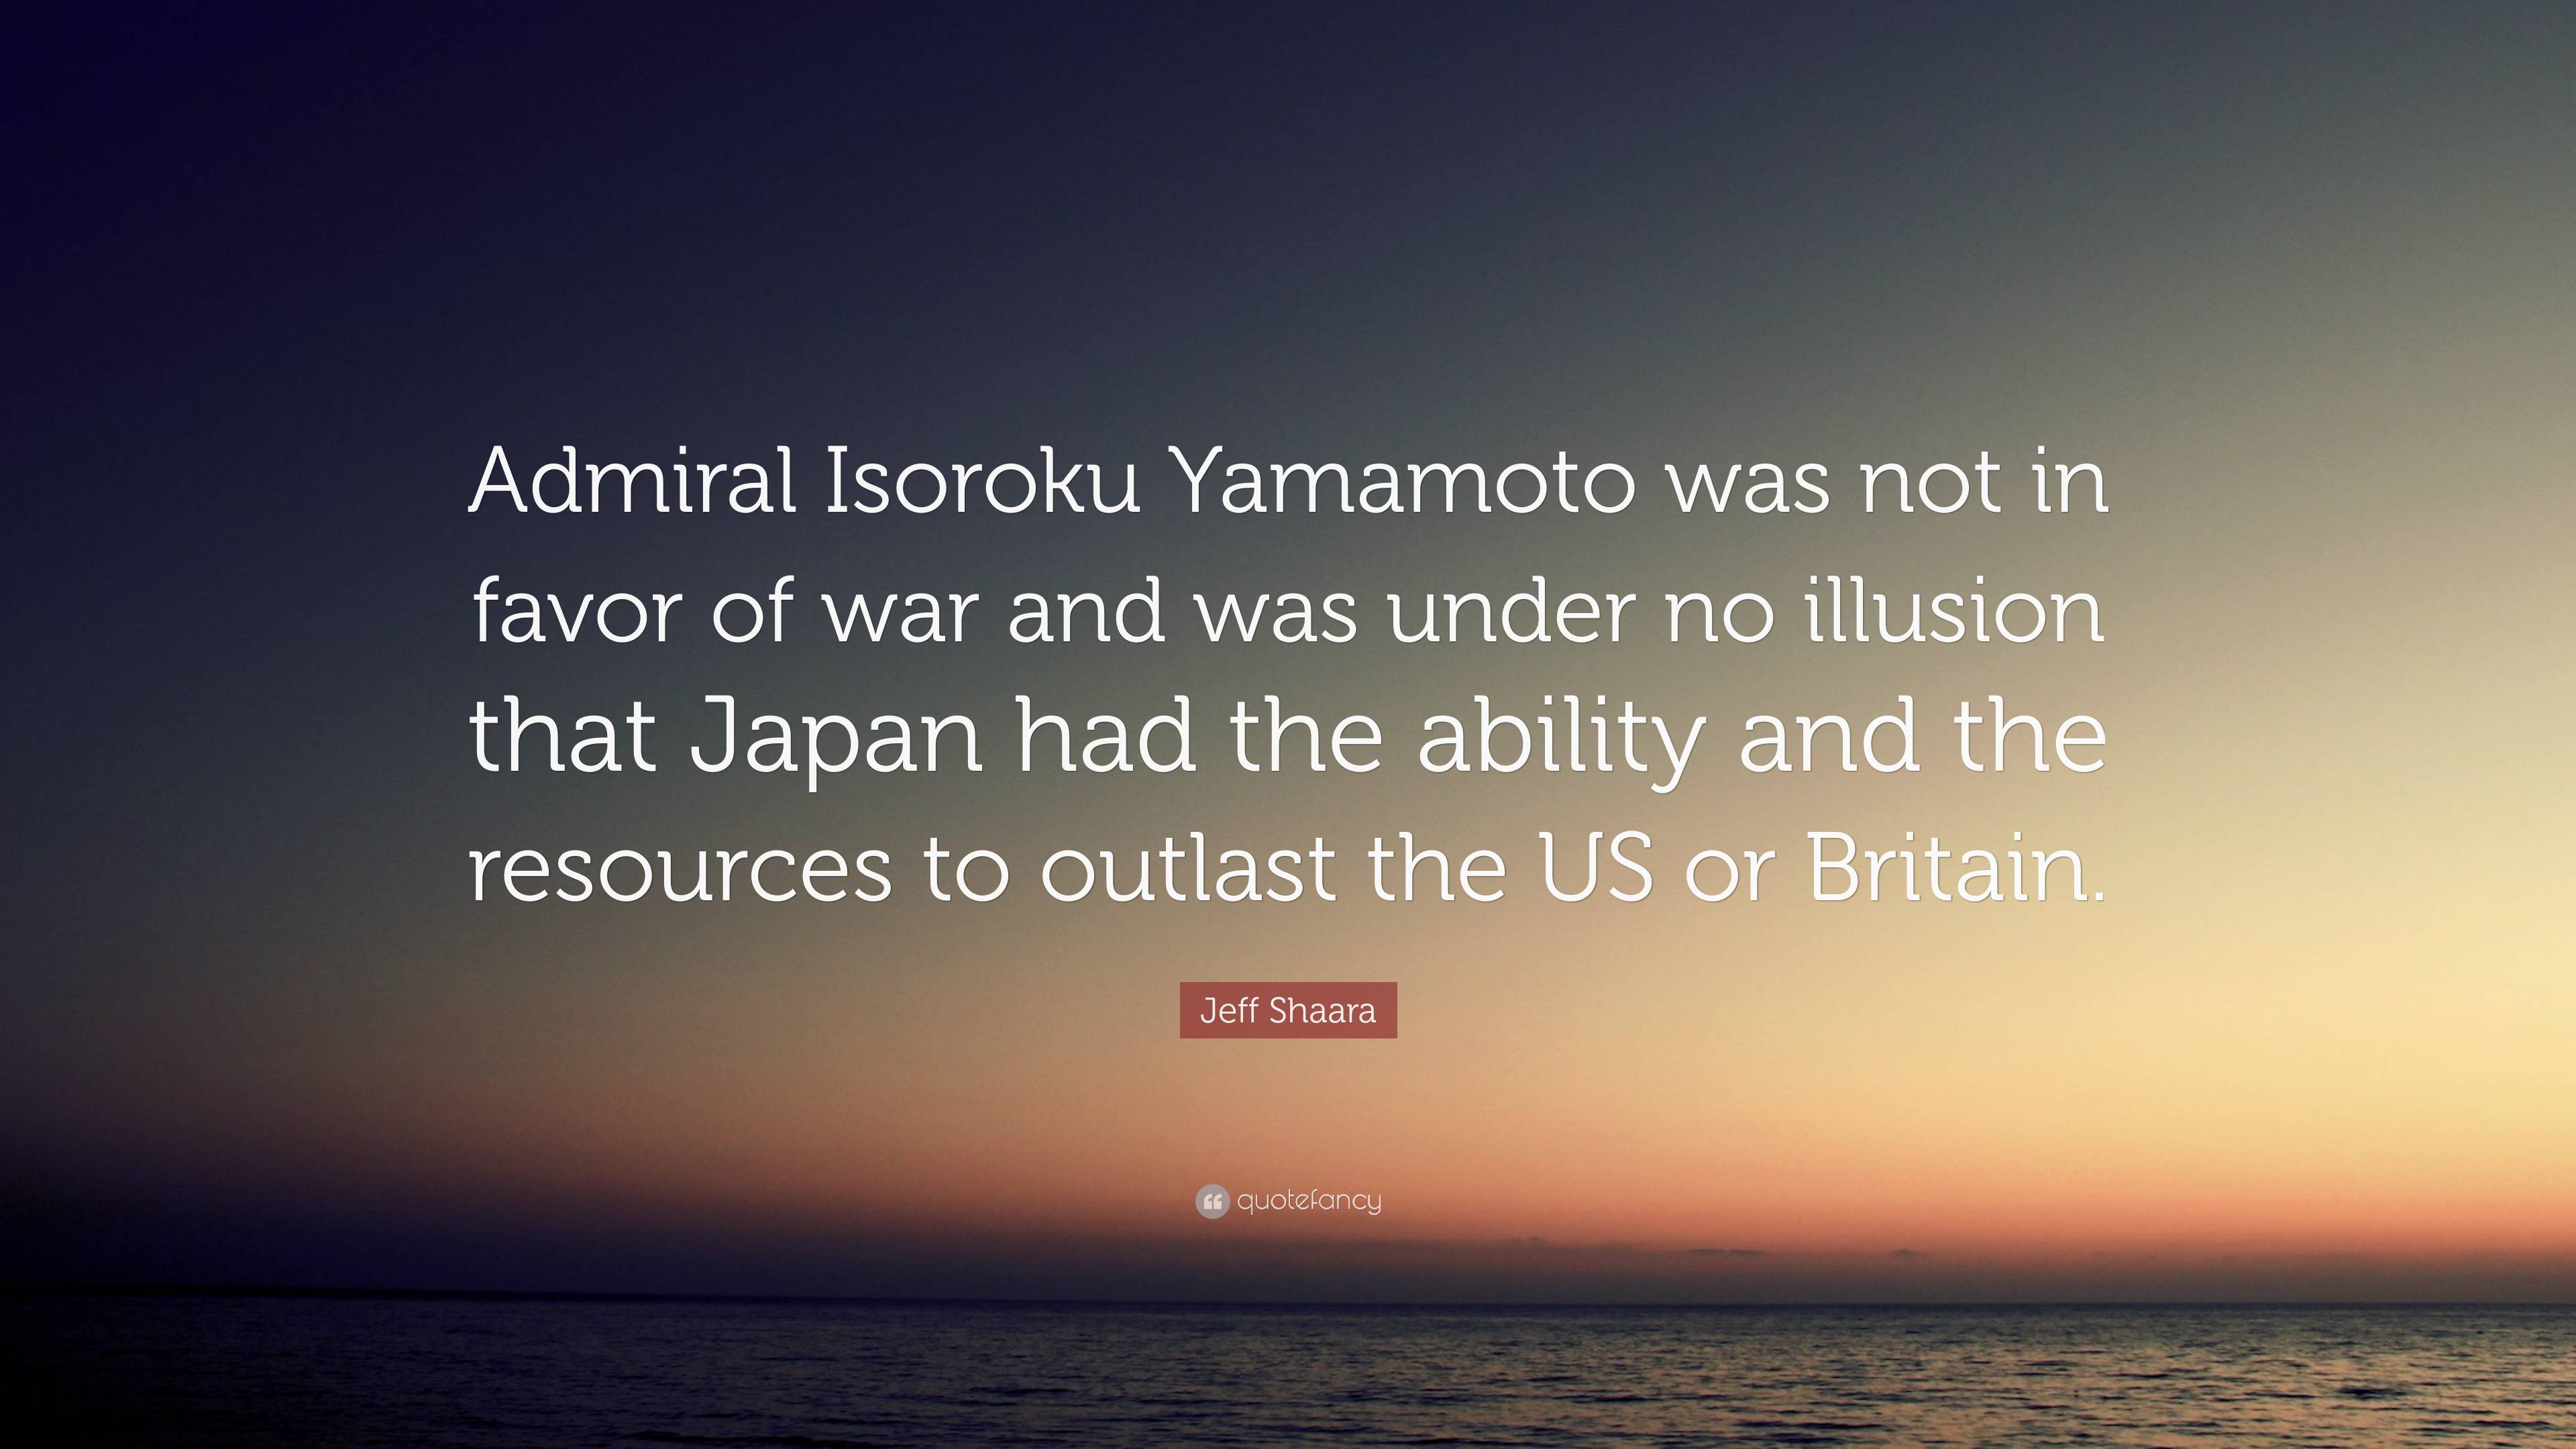 Jeff Shaara Quote: “Admiral Isoroku Yamamoto was not in favor of